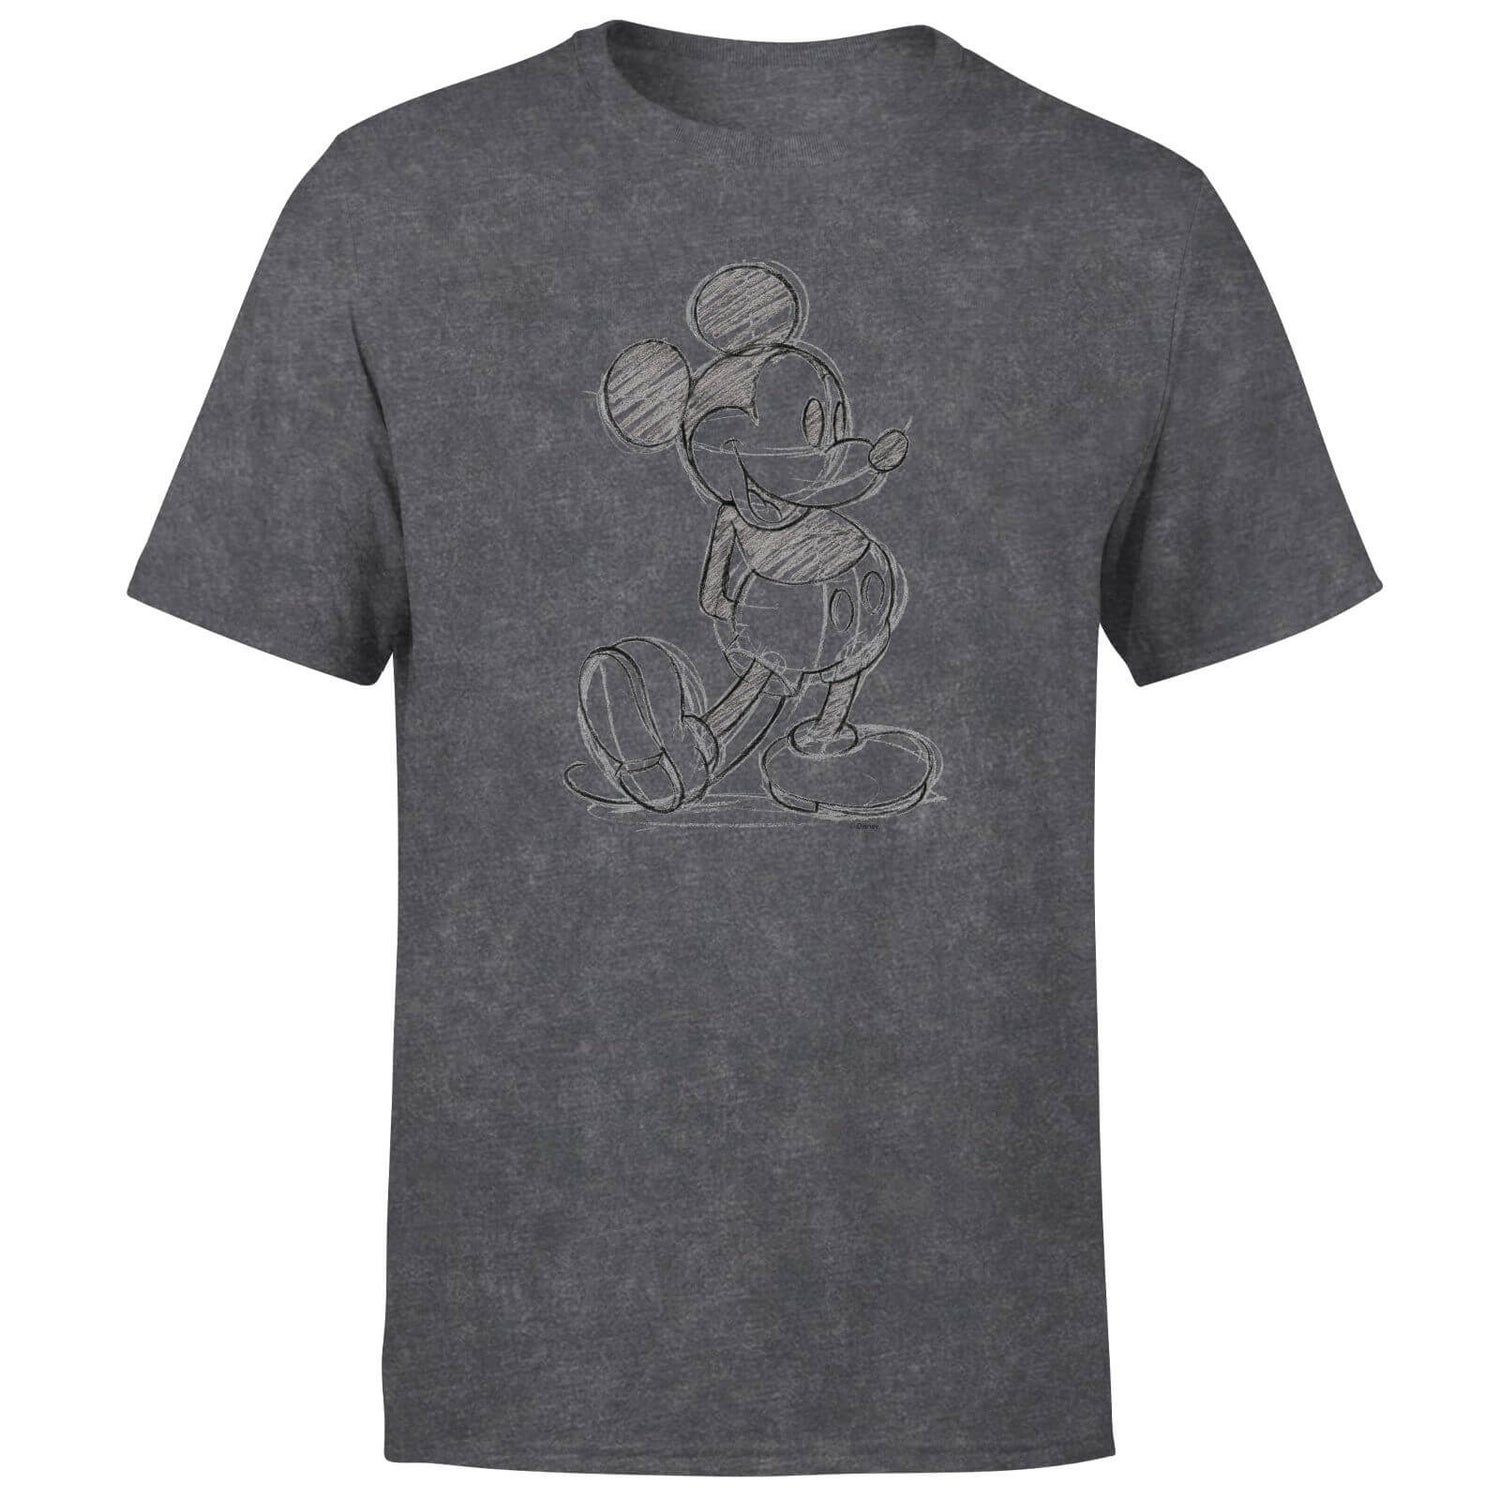 Disney Mickey Mouse Sketch Men's T-Shirt - Black Acid Wash